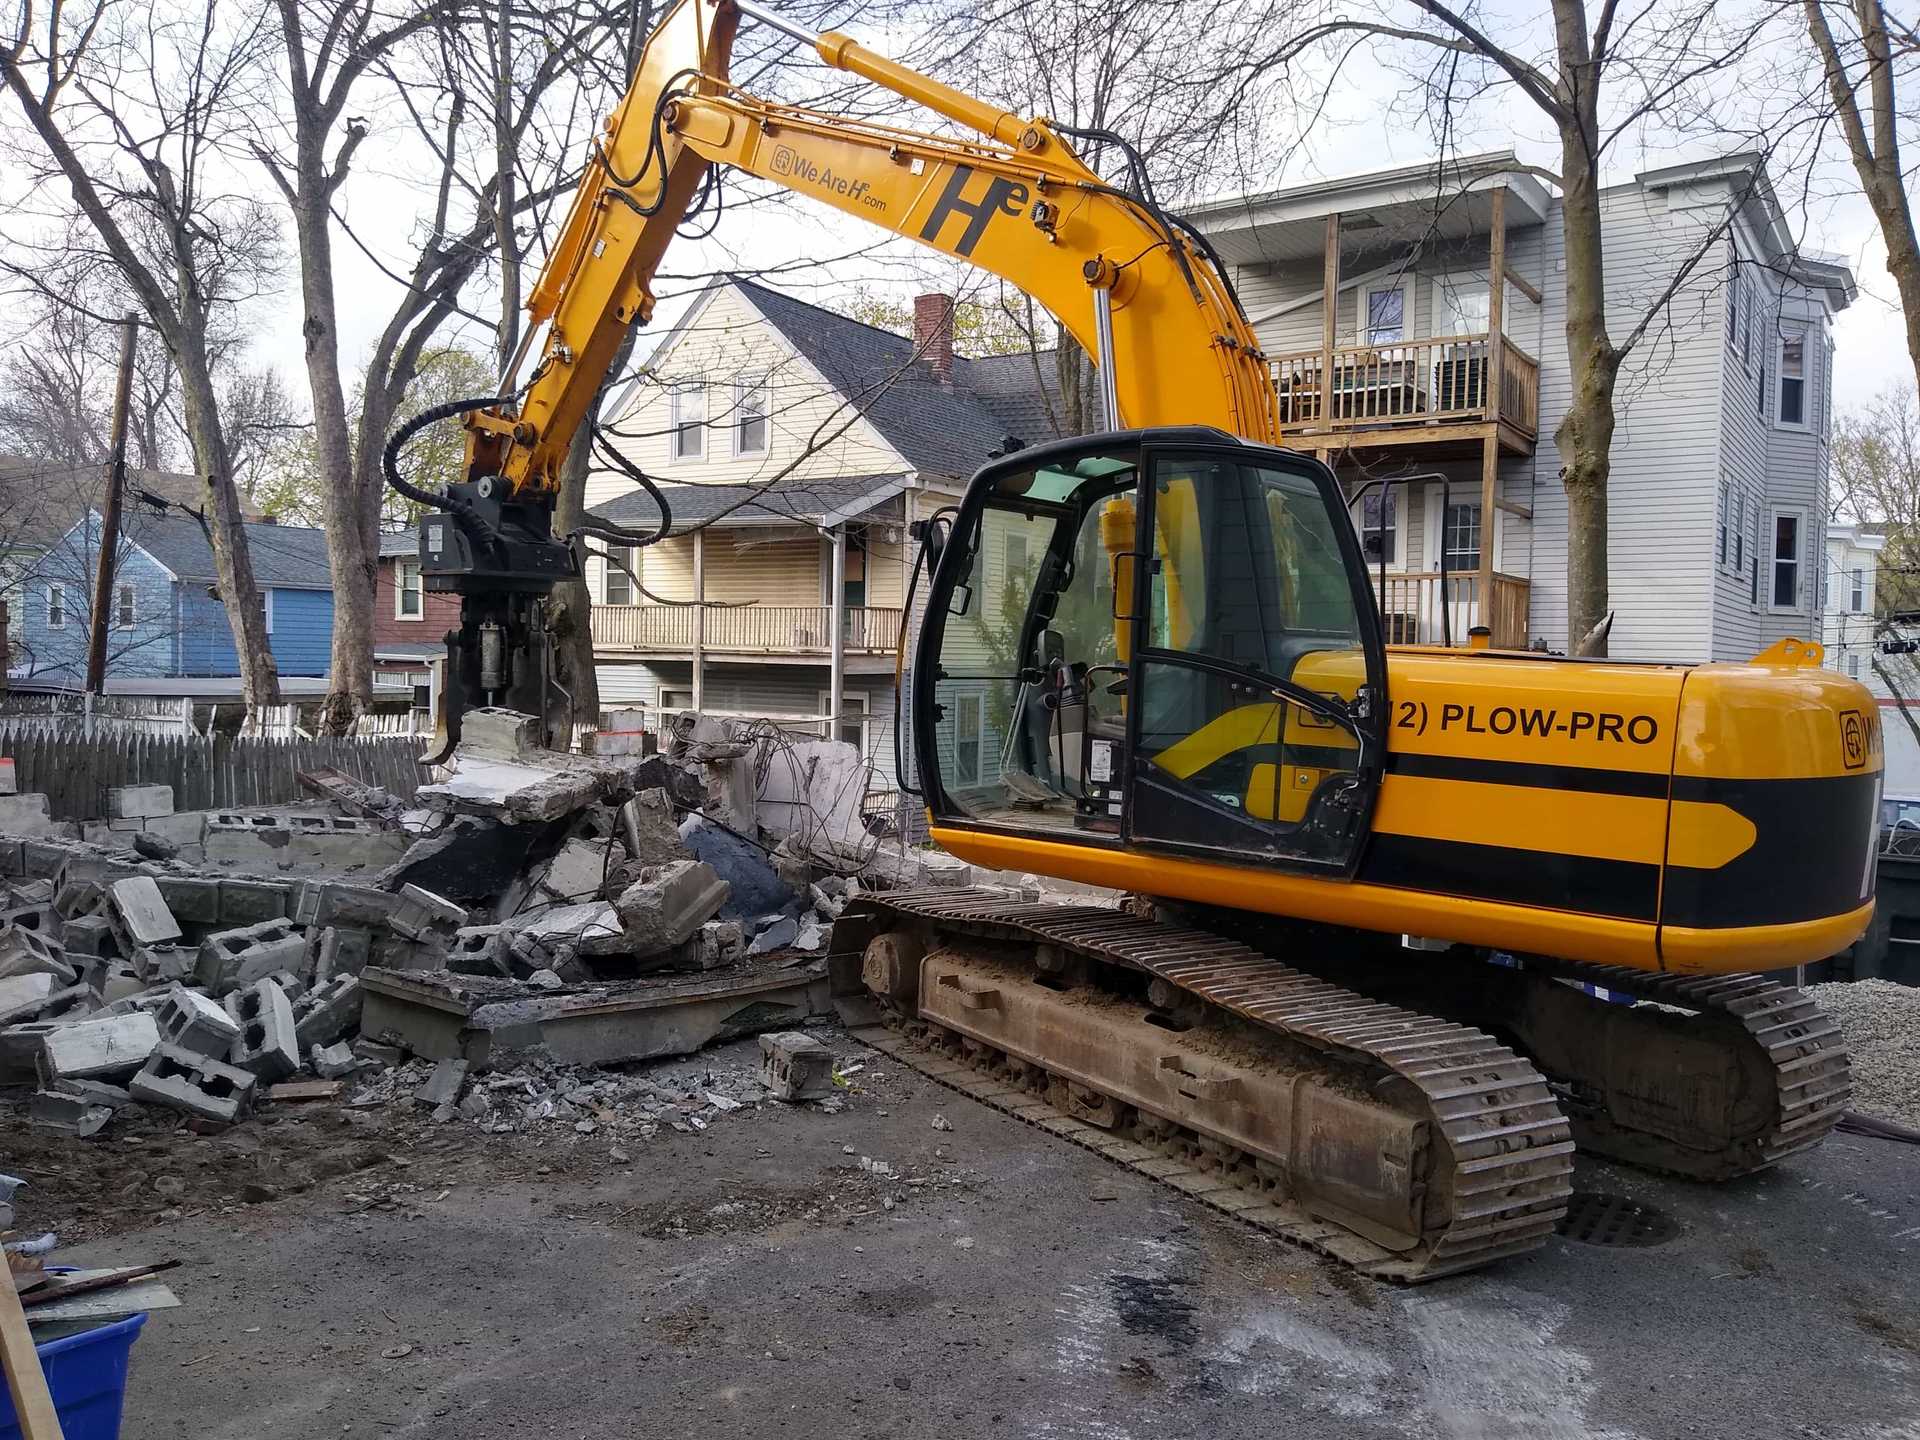 Hunter Environmental Excavator doing demolition